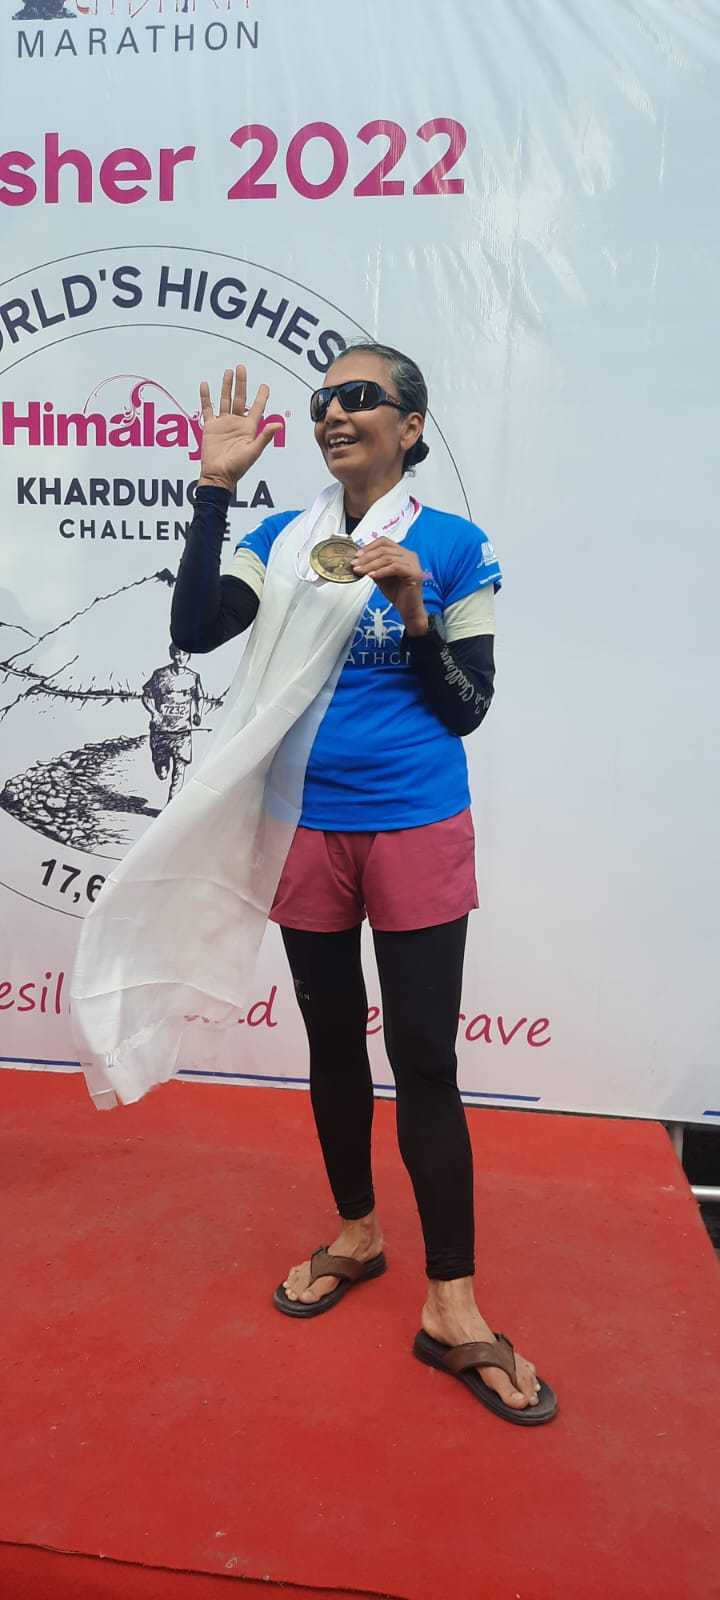 Pushpa Keya Bhatt after completing the Khardung La challenge where she ran 72 km